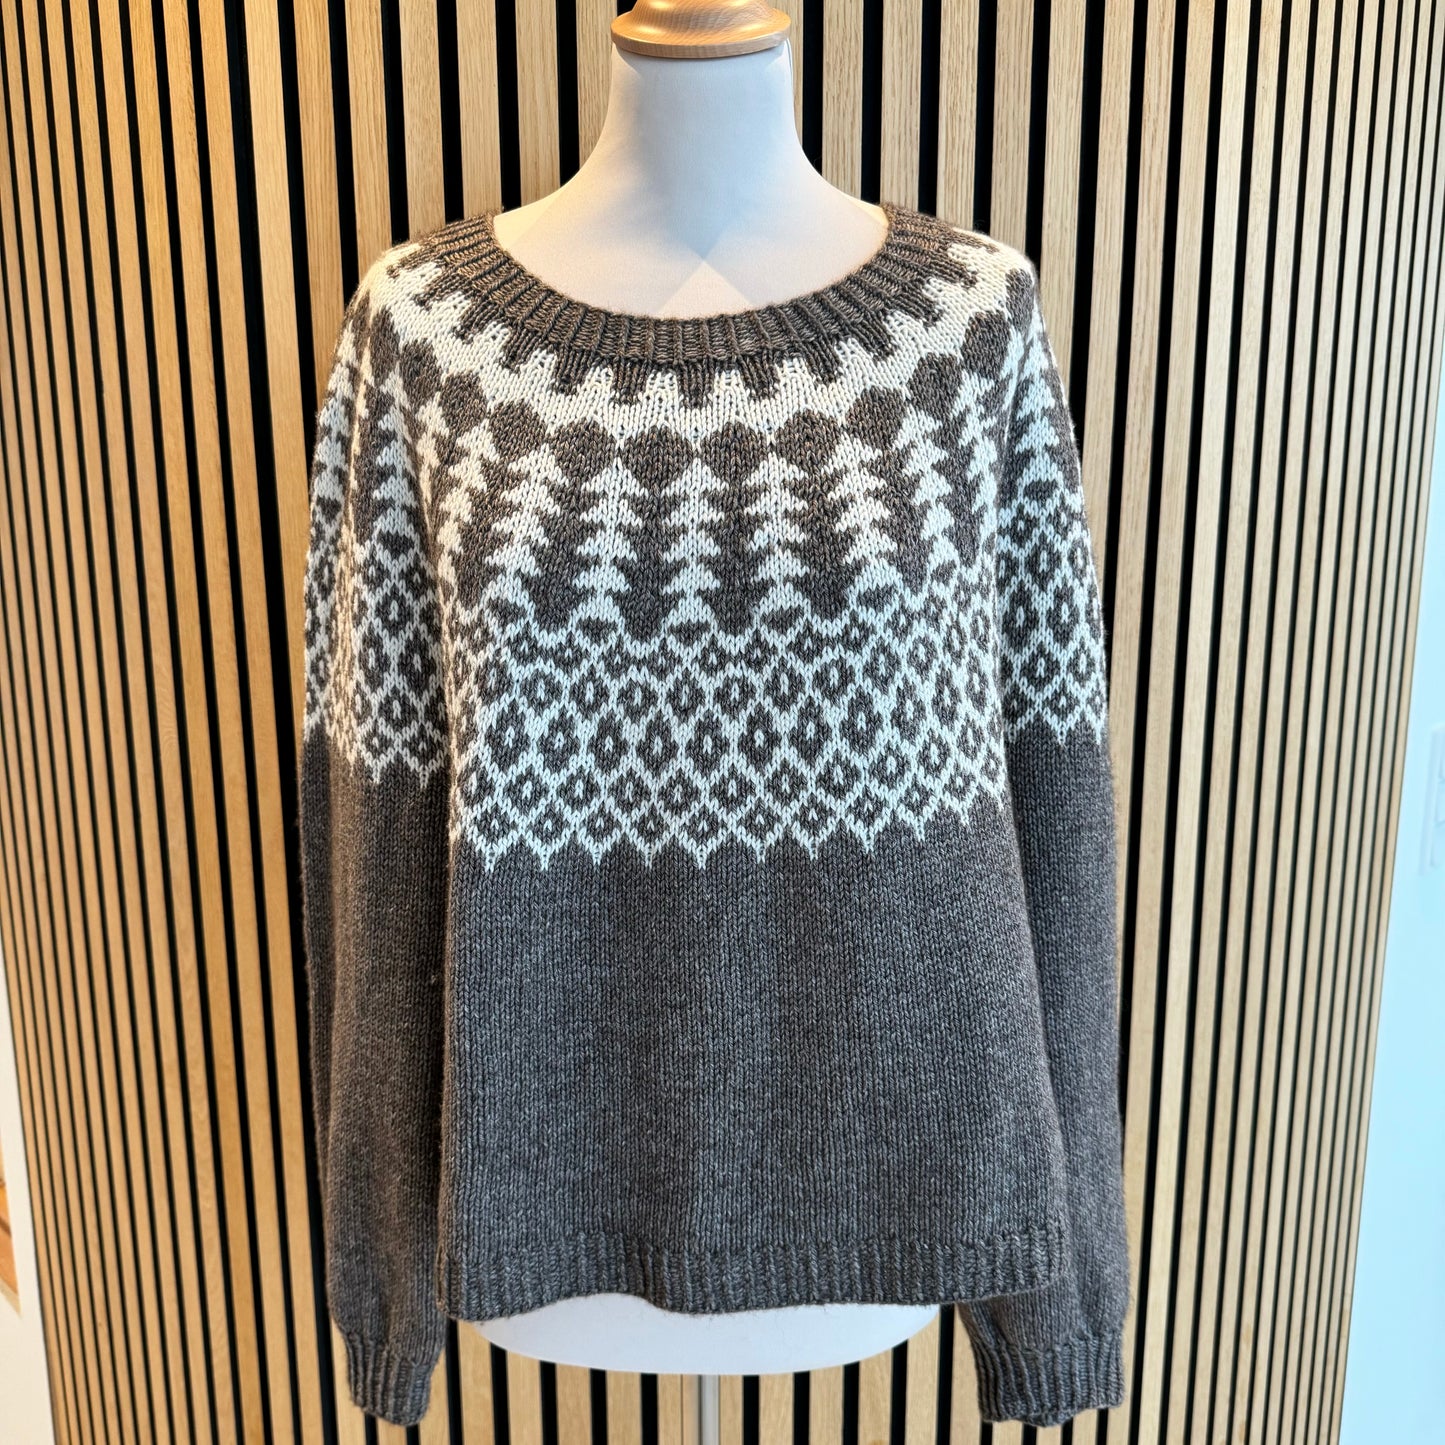 Freidis Sweater - A Knitters World